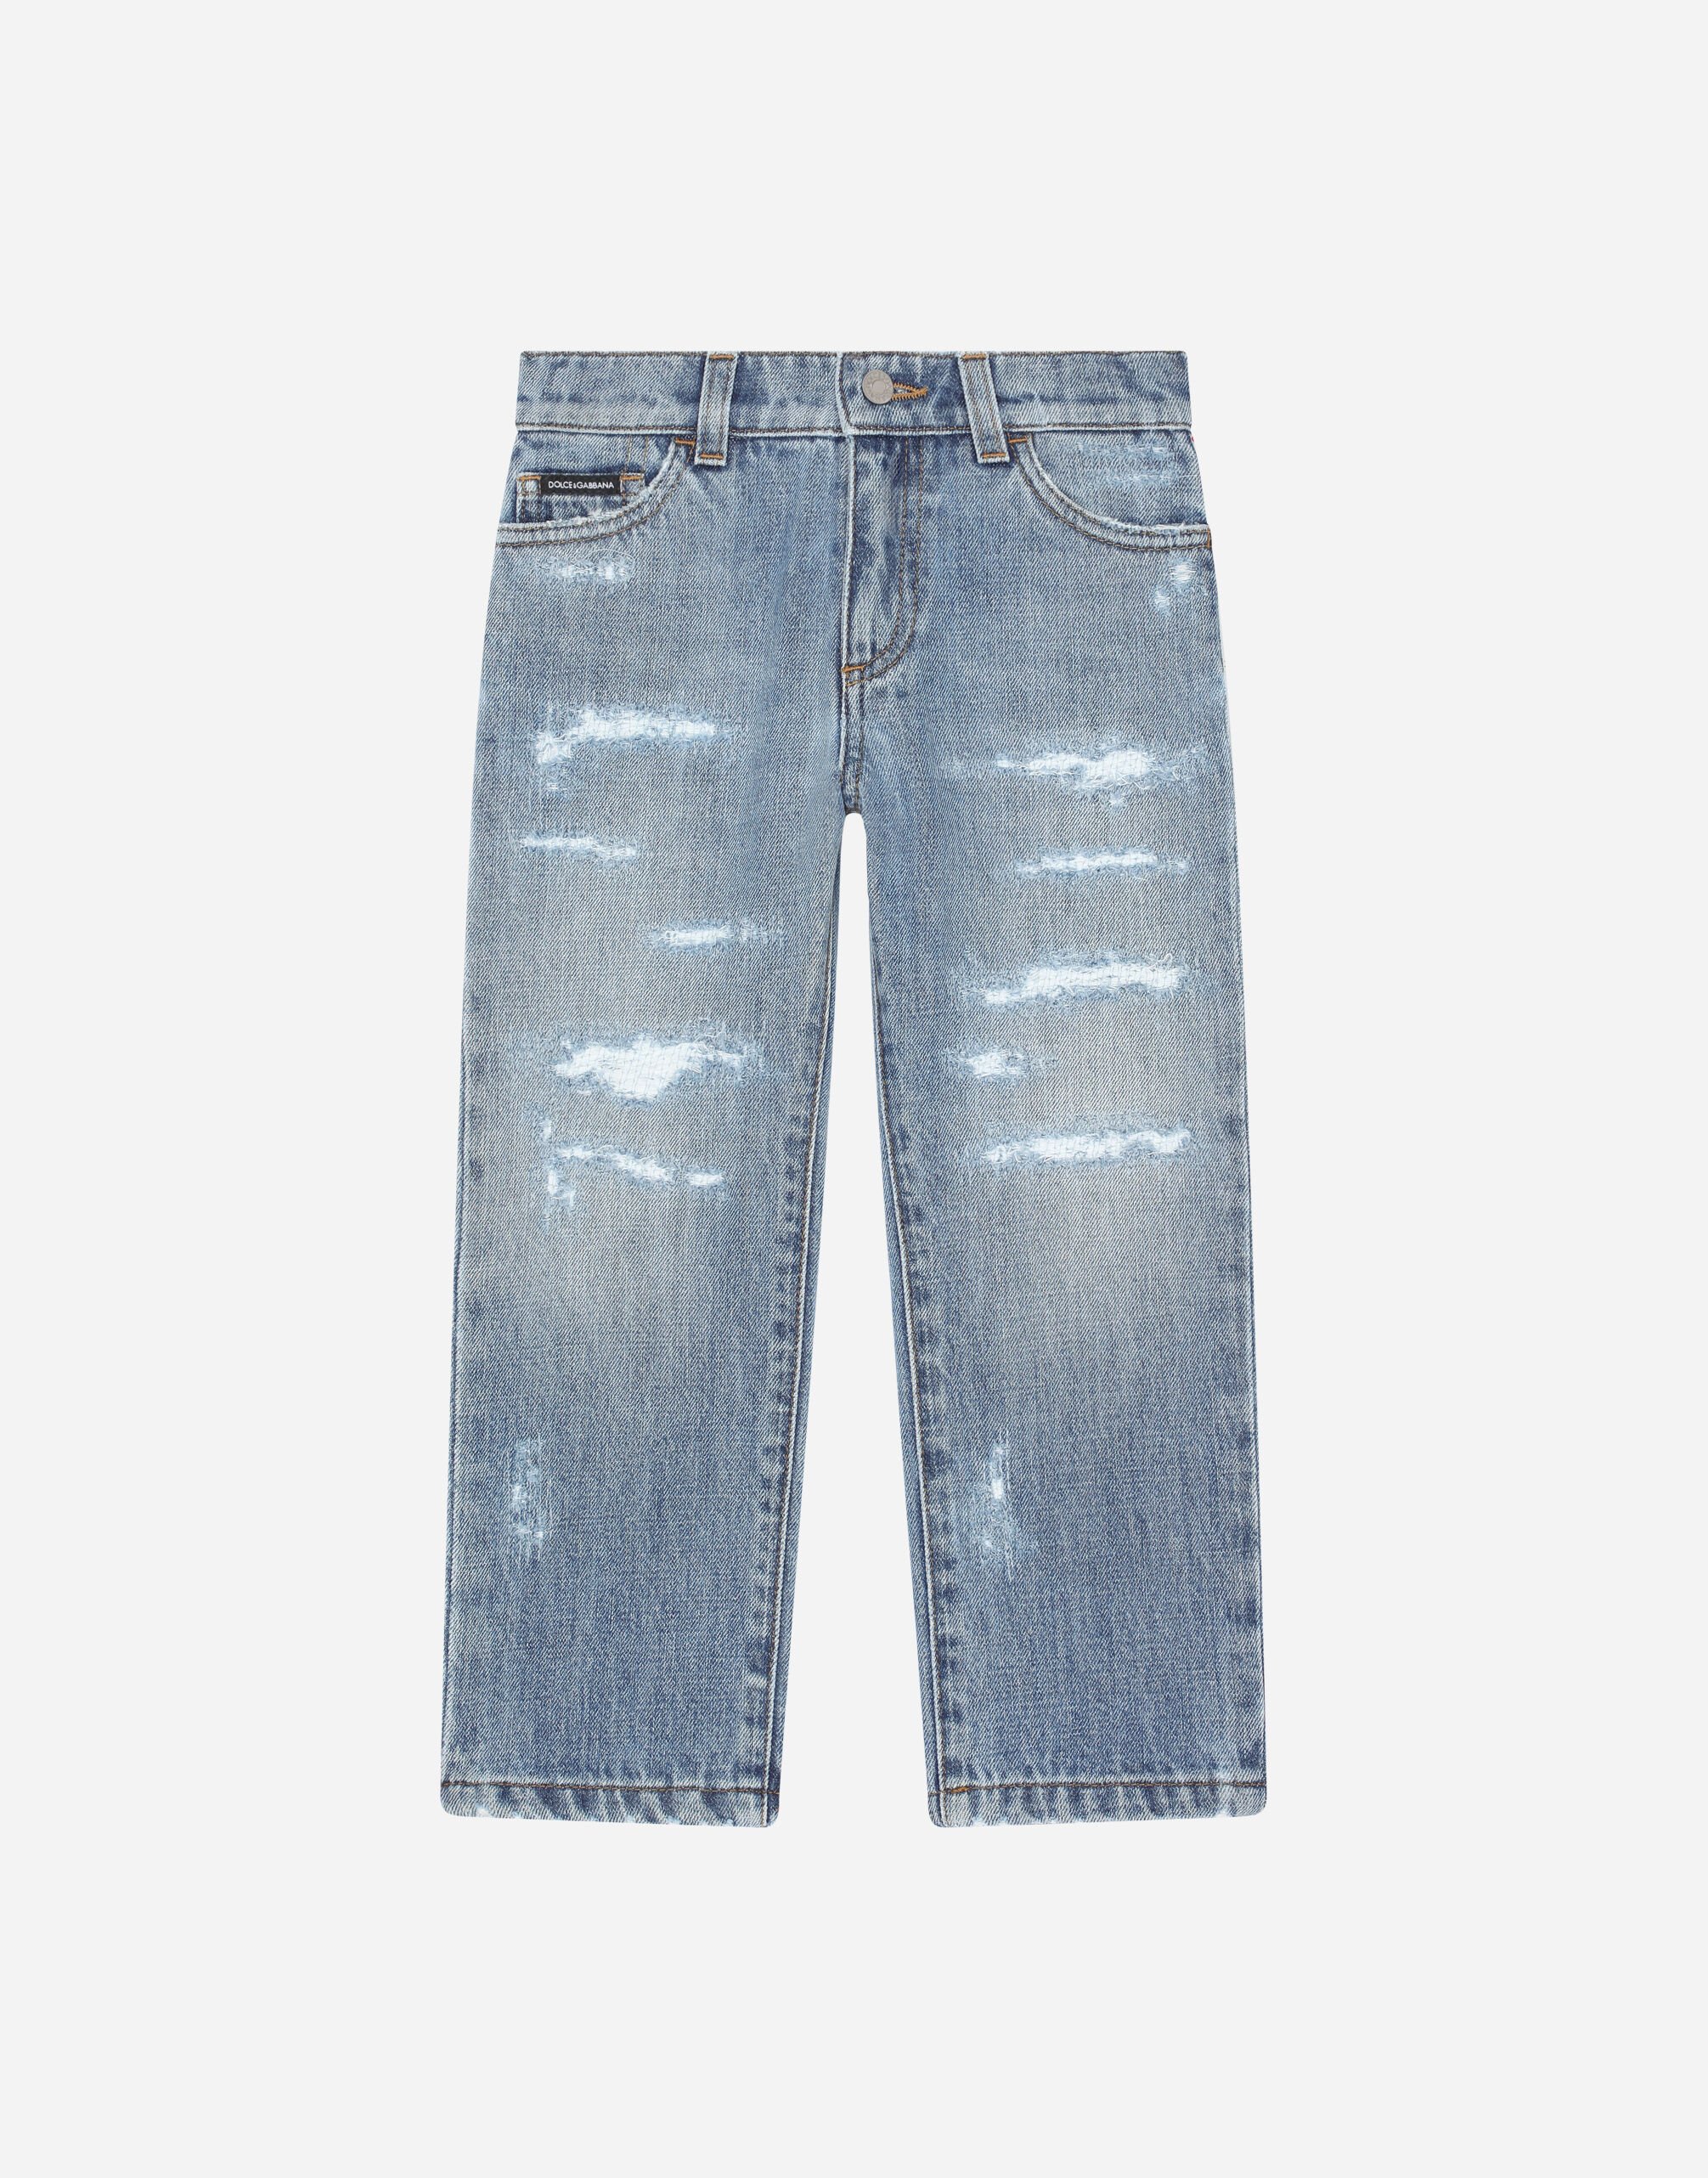 Dolce & Gabbana Jeans in denim lavato con abrasioni Stampa EM0103AD280